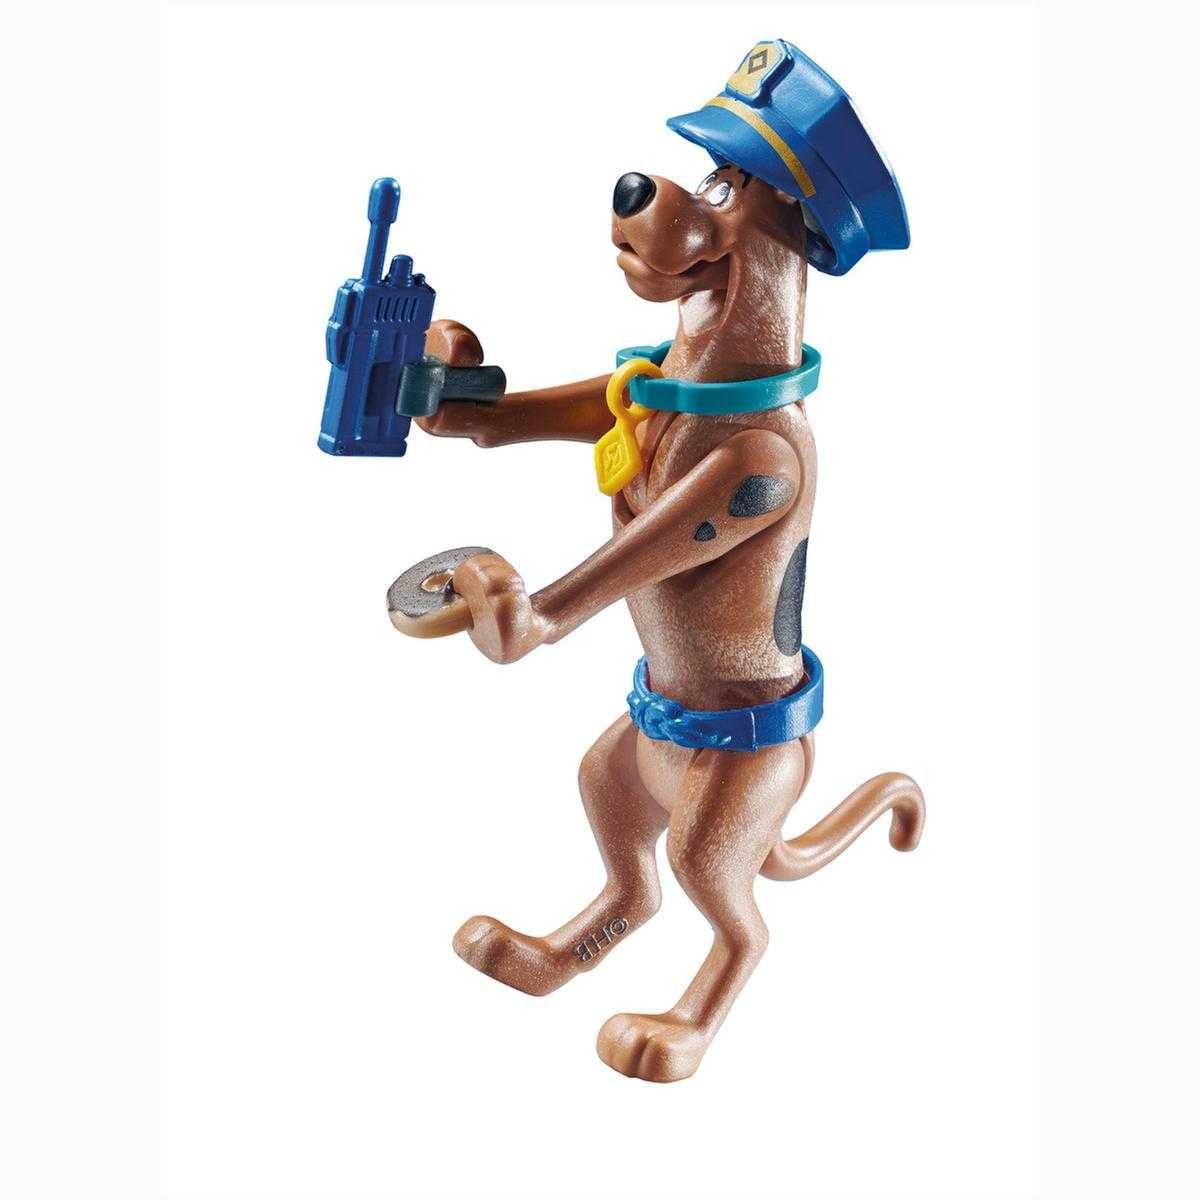 PROMO:Playmobil Scooby Doo  Polícia 70714